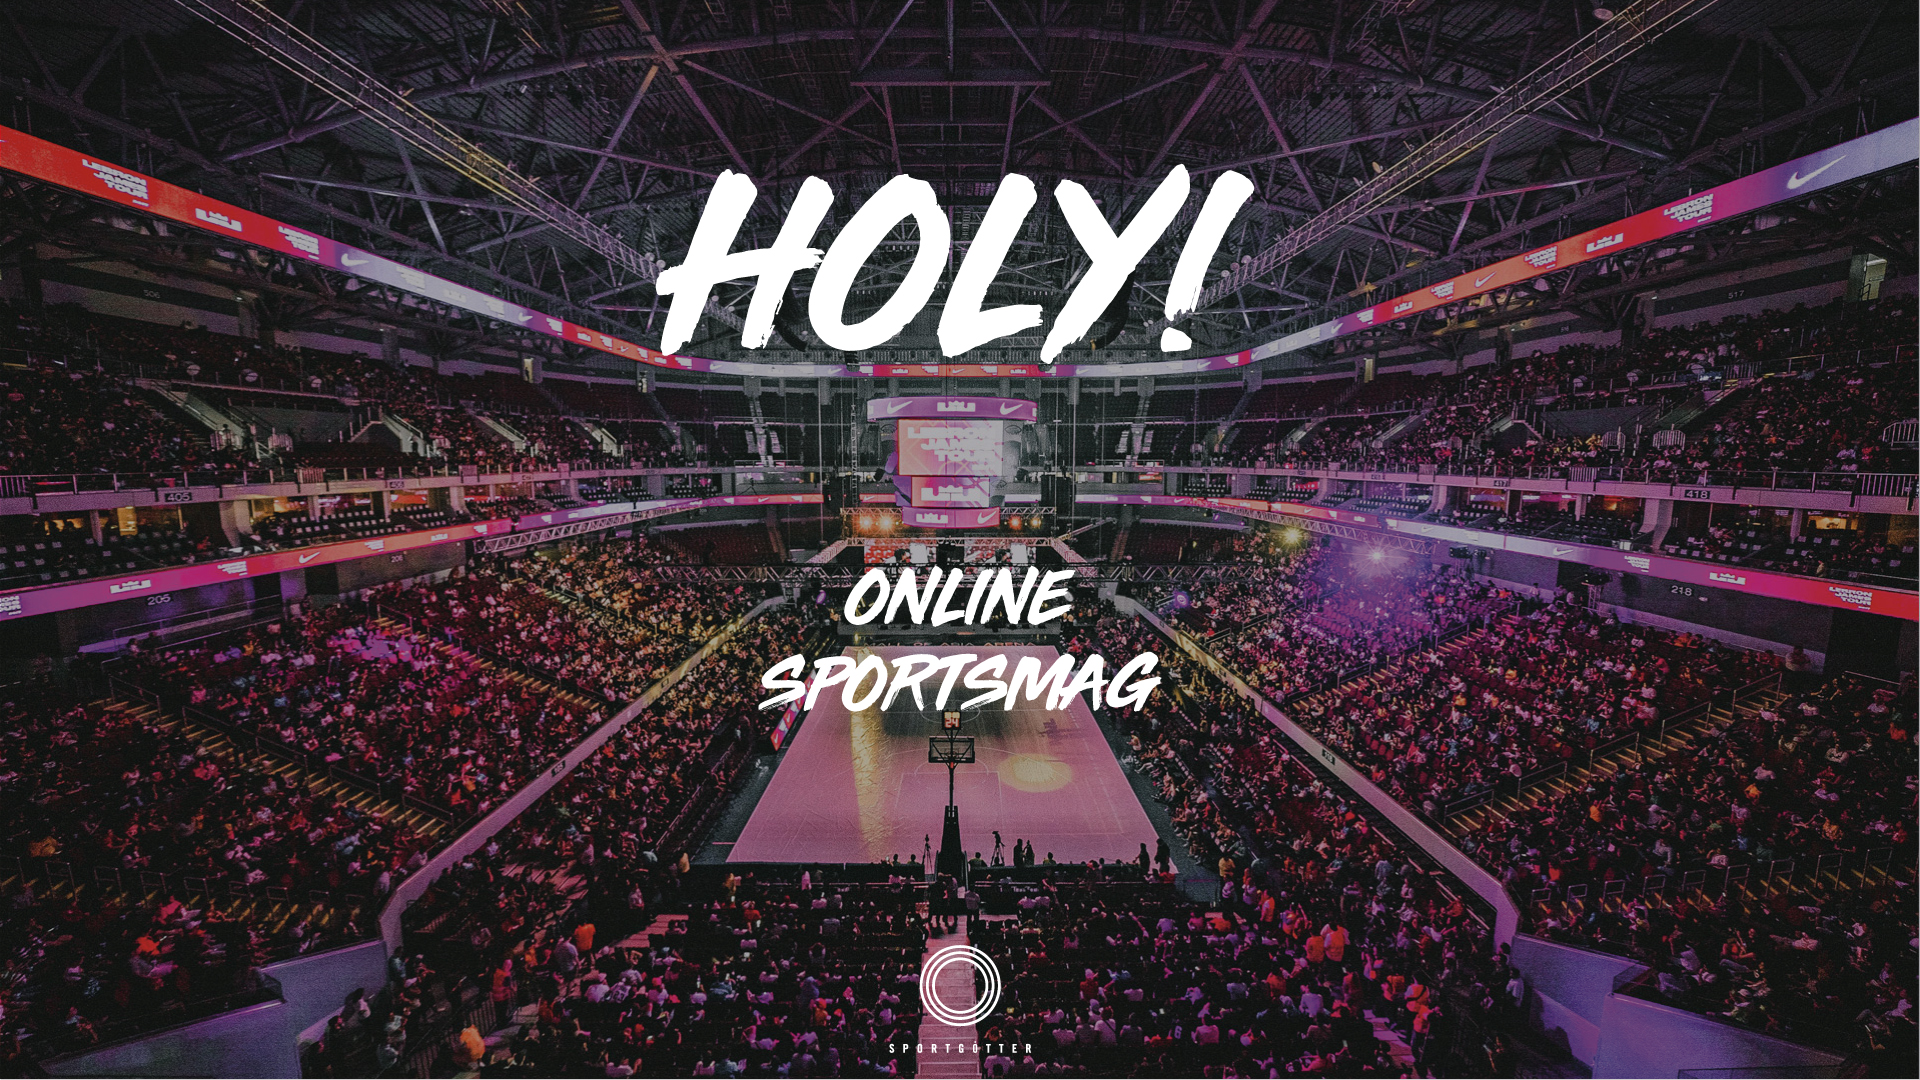 "HOLY!" - Your Online Sportsmagazine